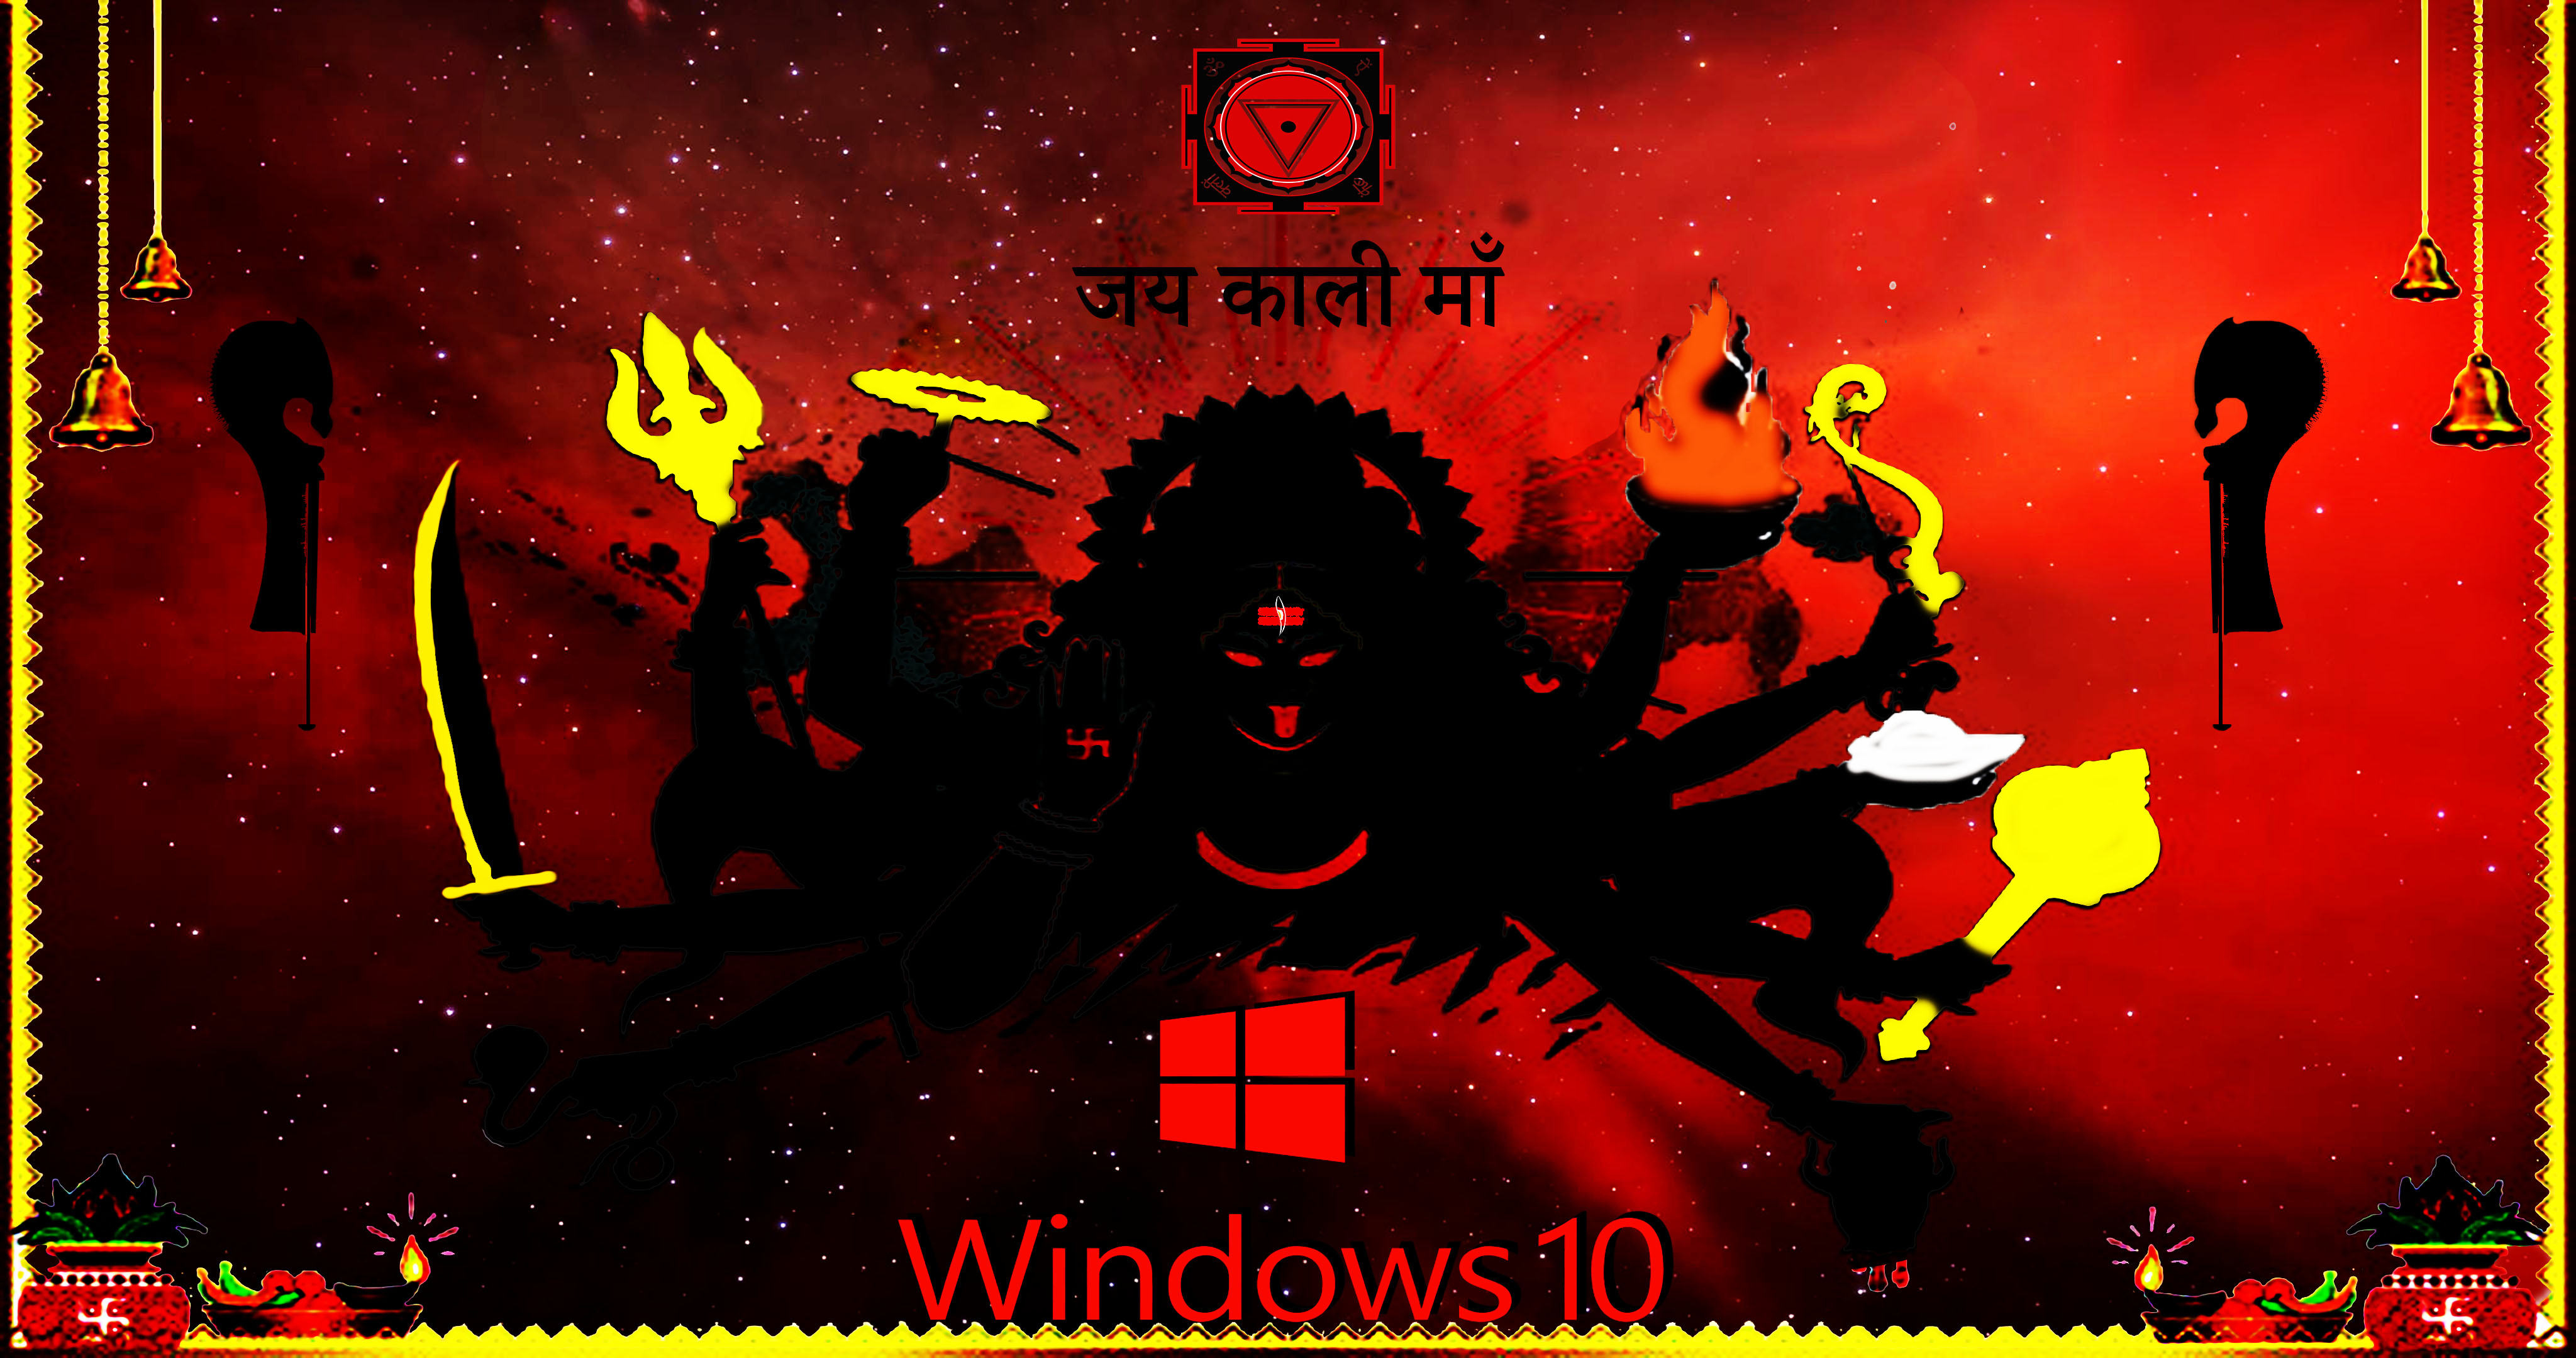 Kali Maa Windows 10 Wallpaper by Ravimishra085 on DeviantArt